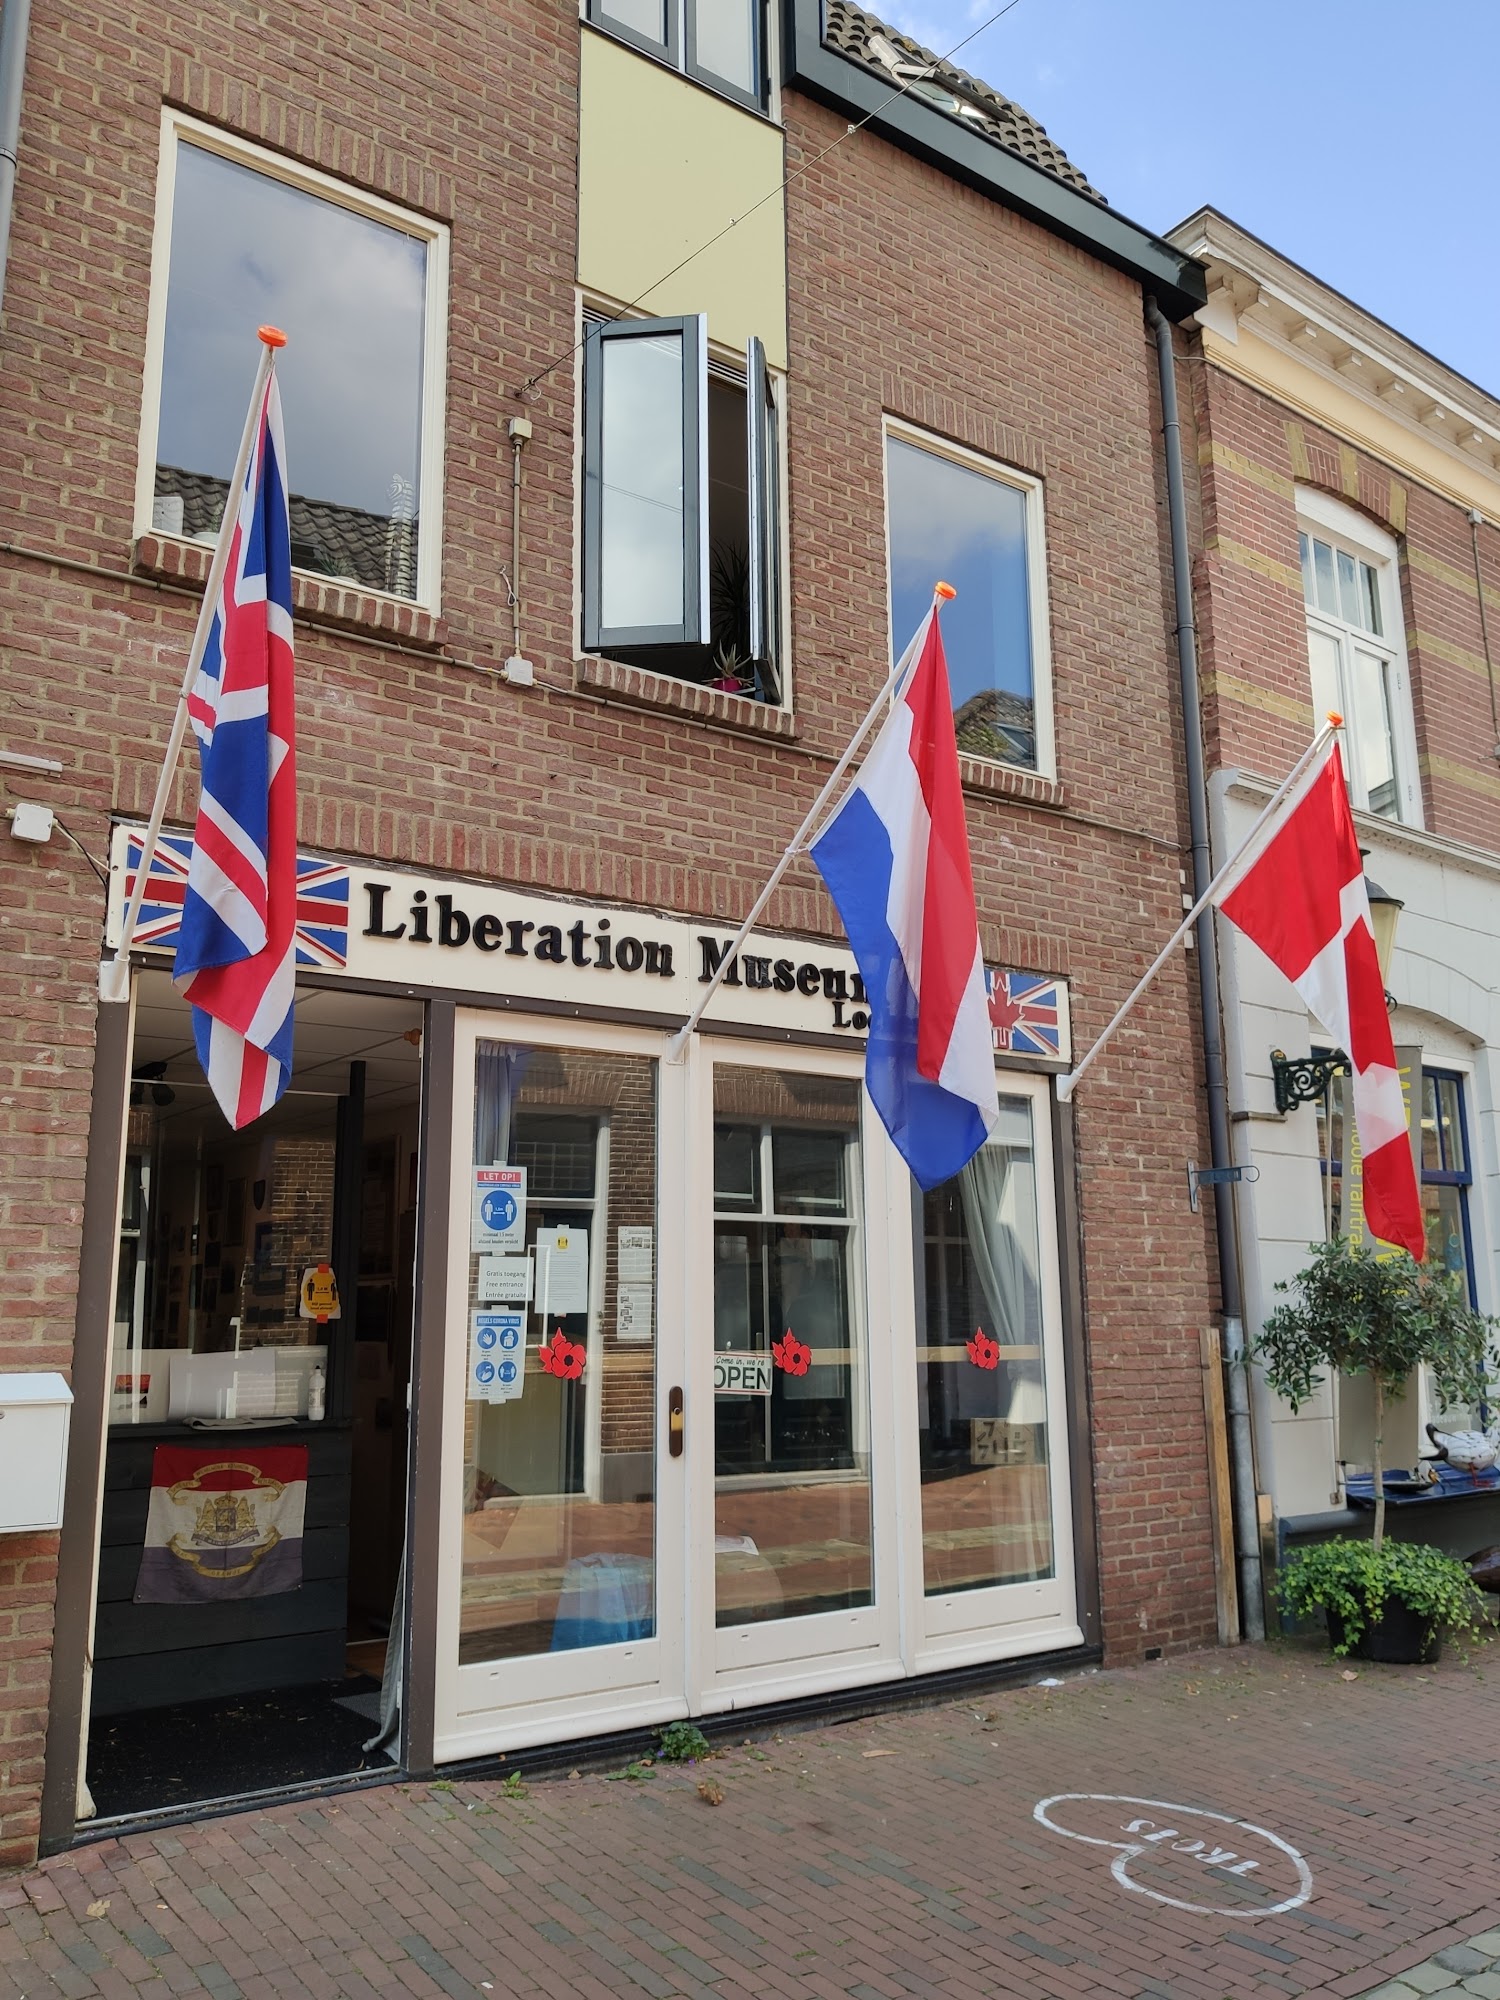 Liberation Museum